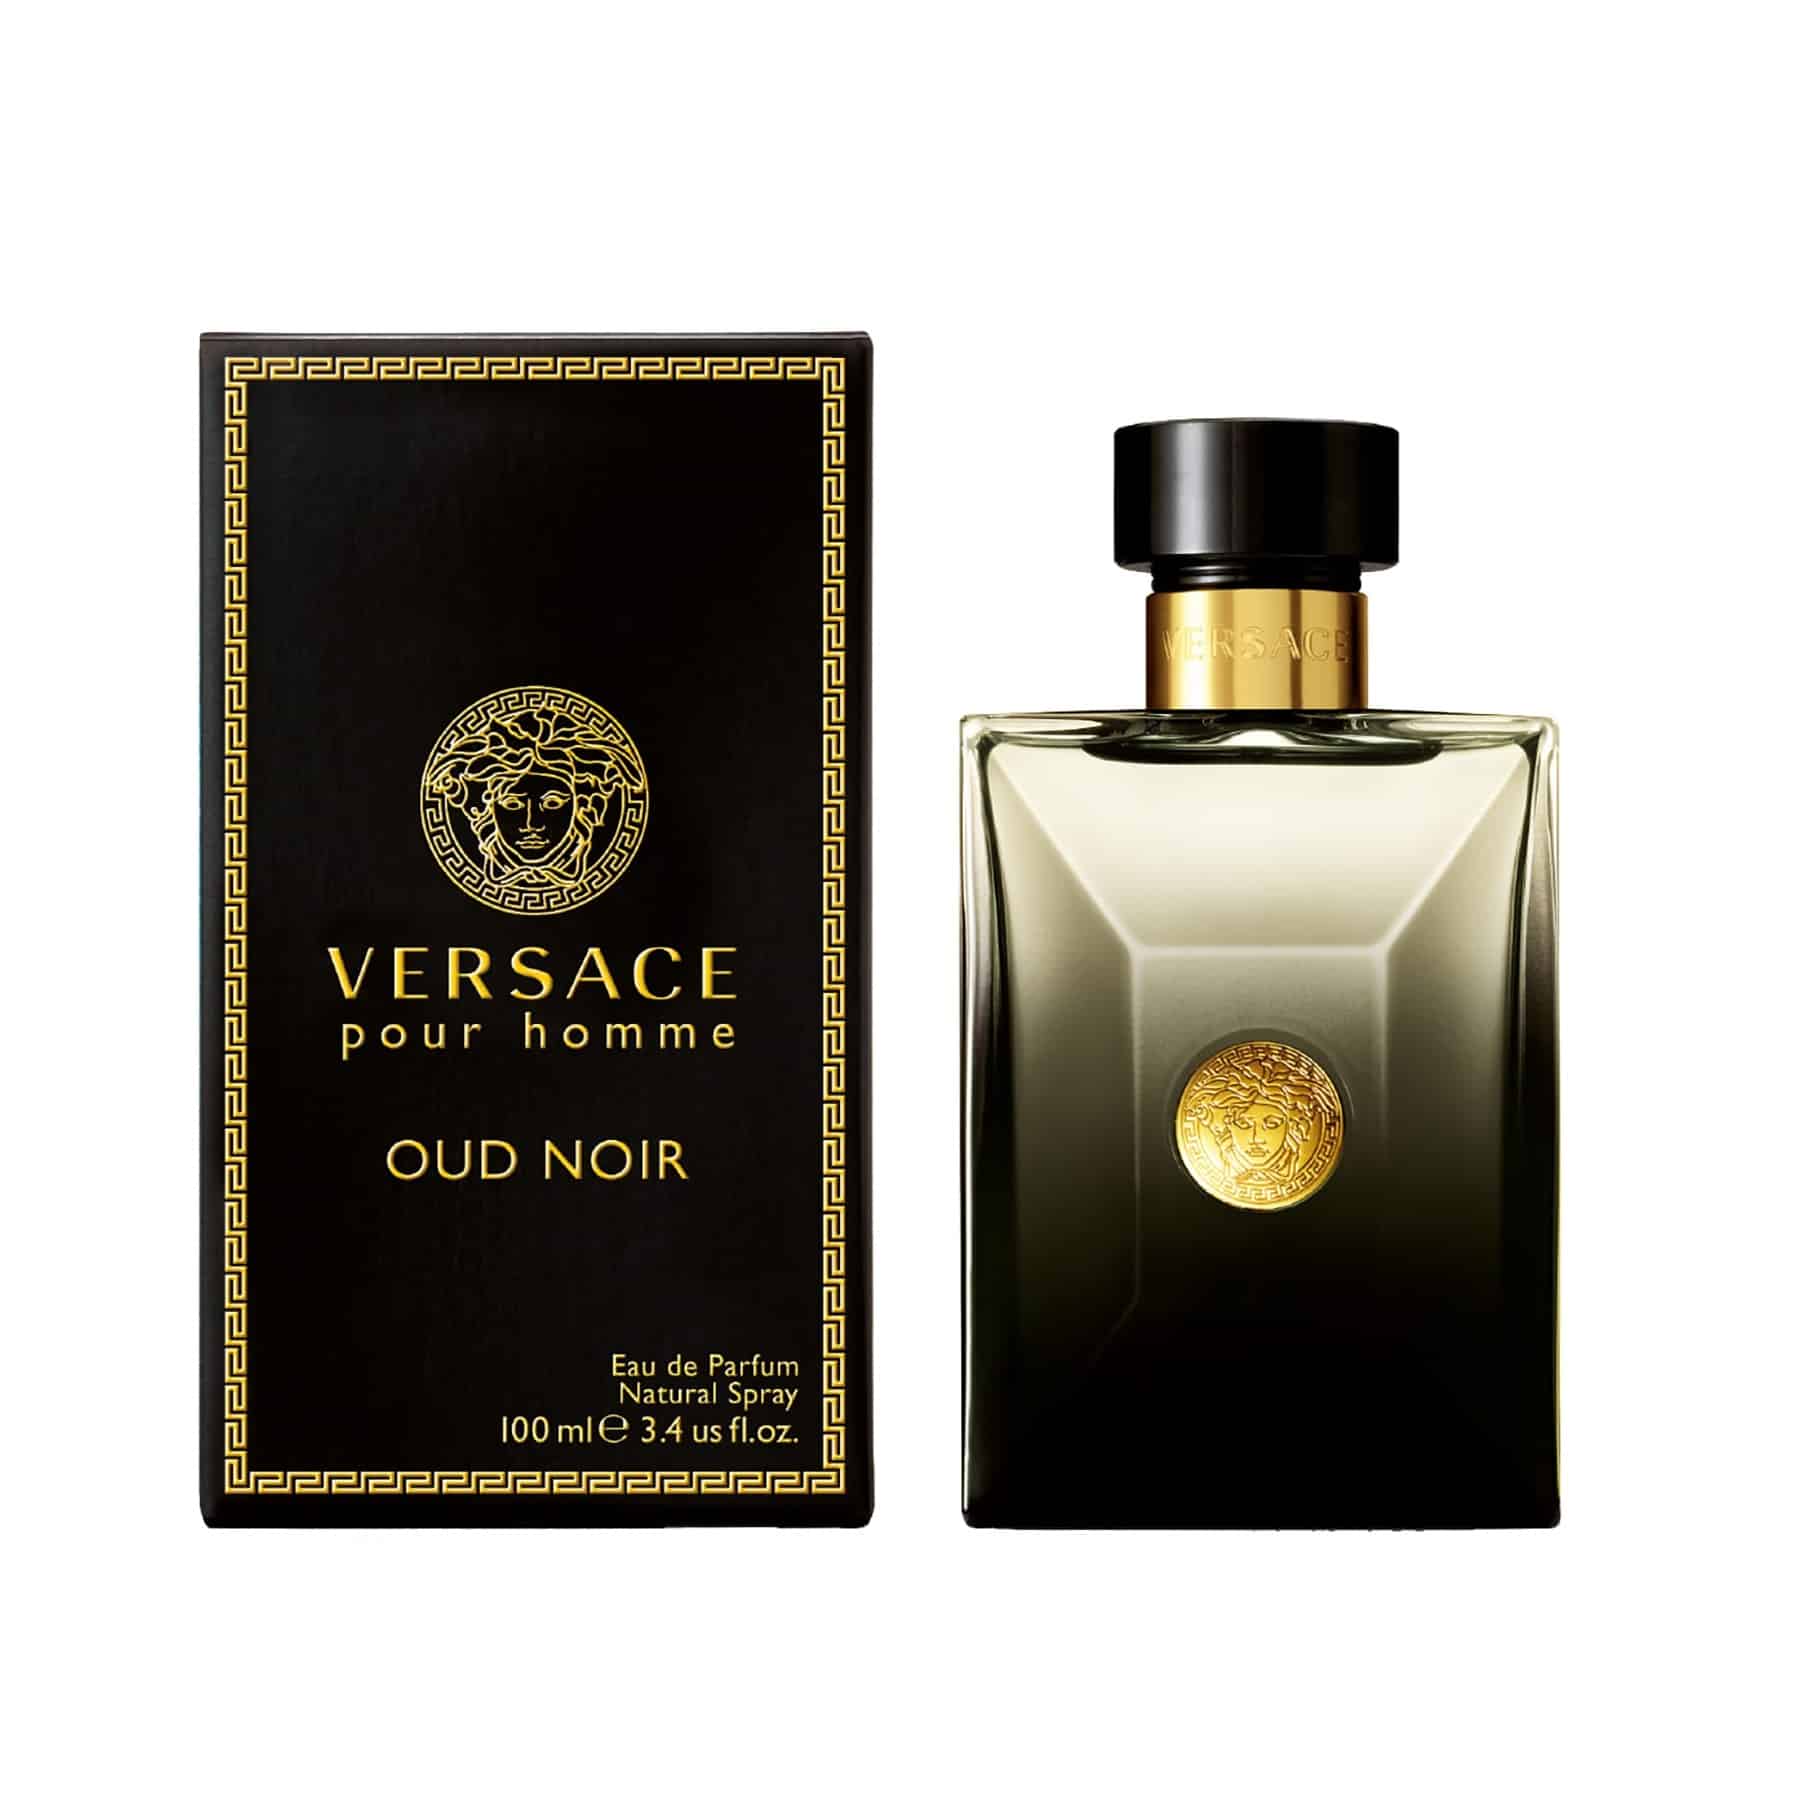 Parfum oriental homme Oud Noir Versace